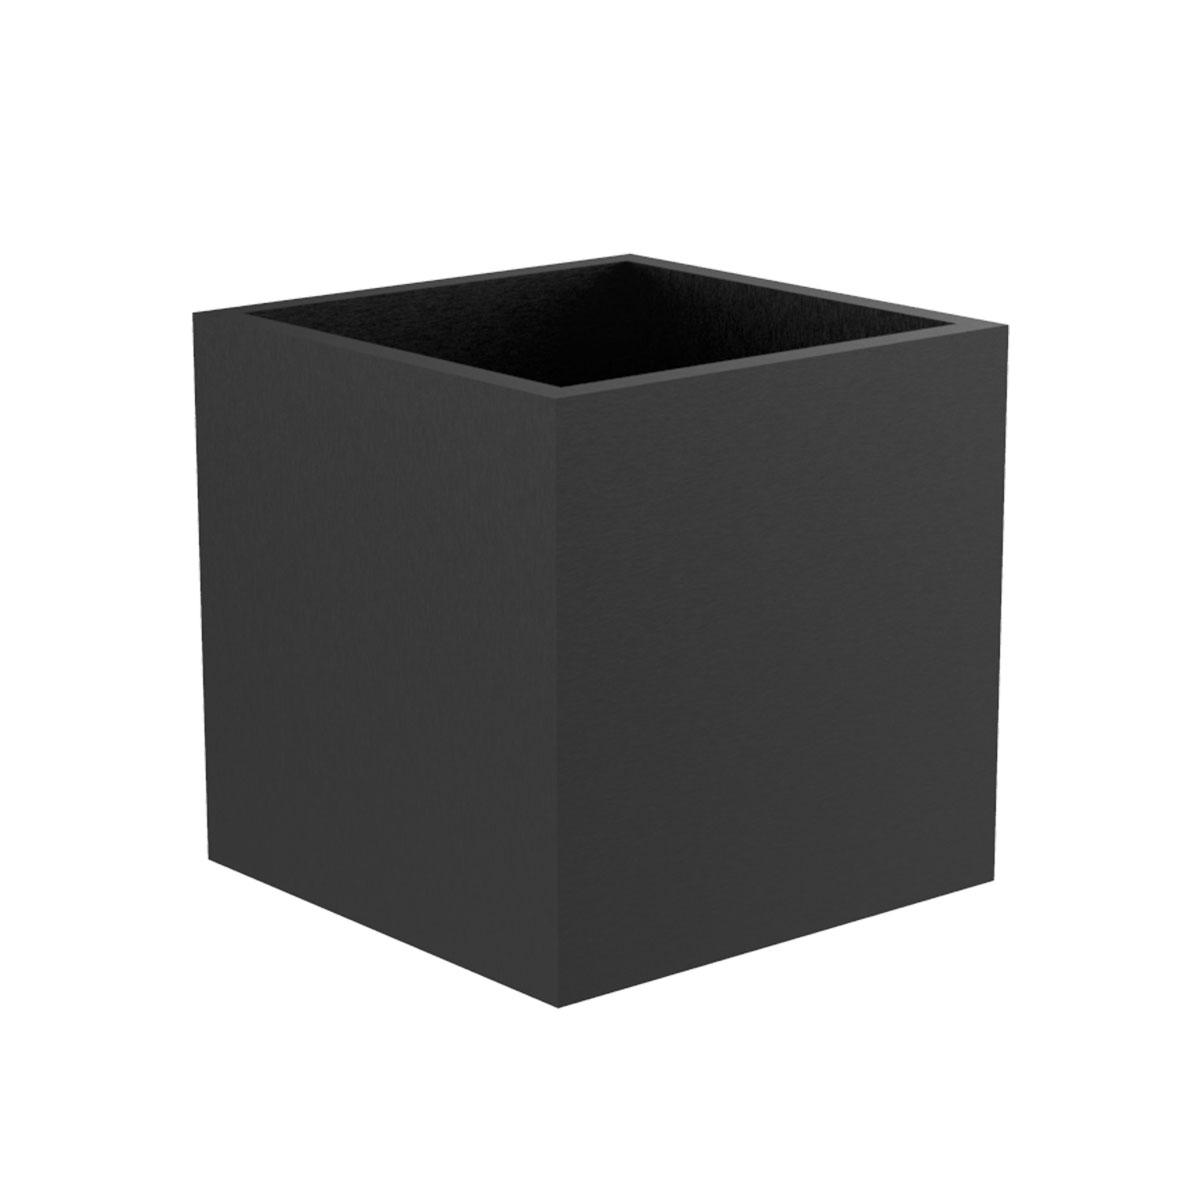 SIGOC Žardinjera Cube XS